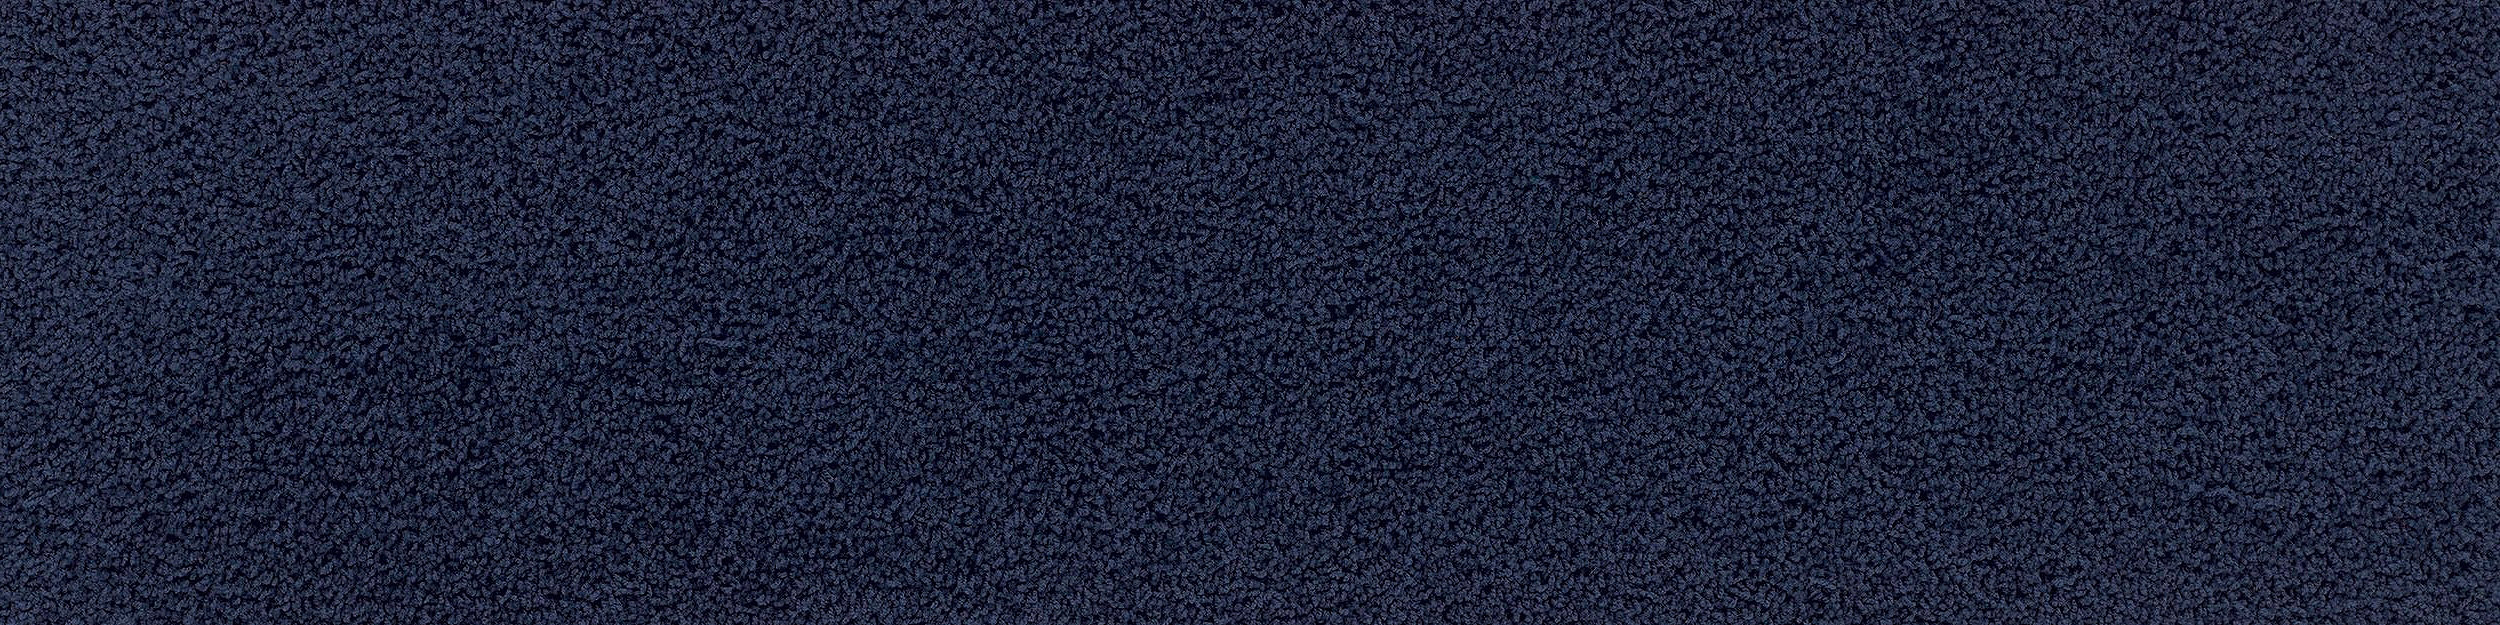 HN830 Carpet Tile In Cobalt numéro d’image 10